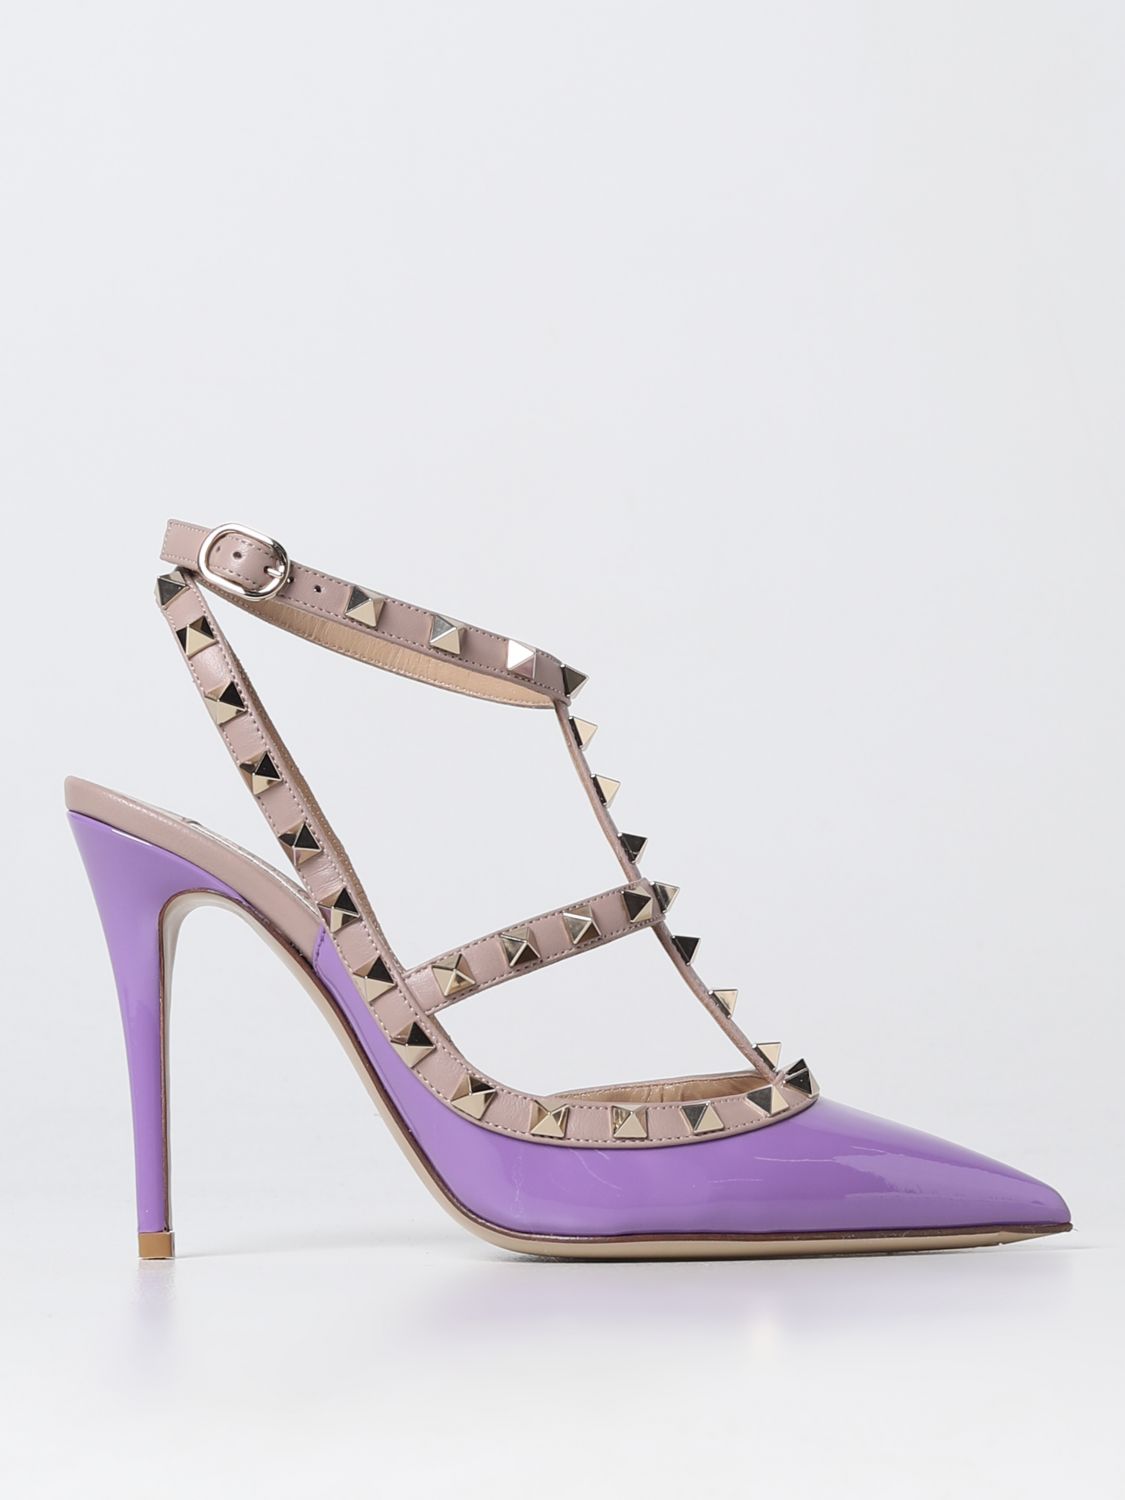 VALENTINO GARAVANI: high heel shoes for woman - Wisteria | Valentino ...